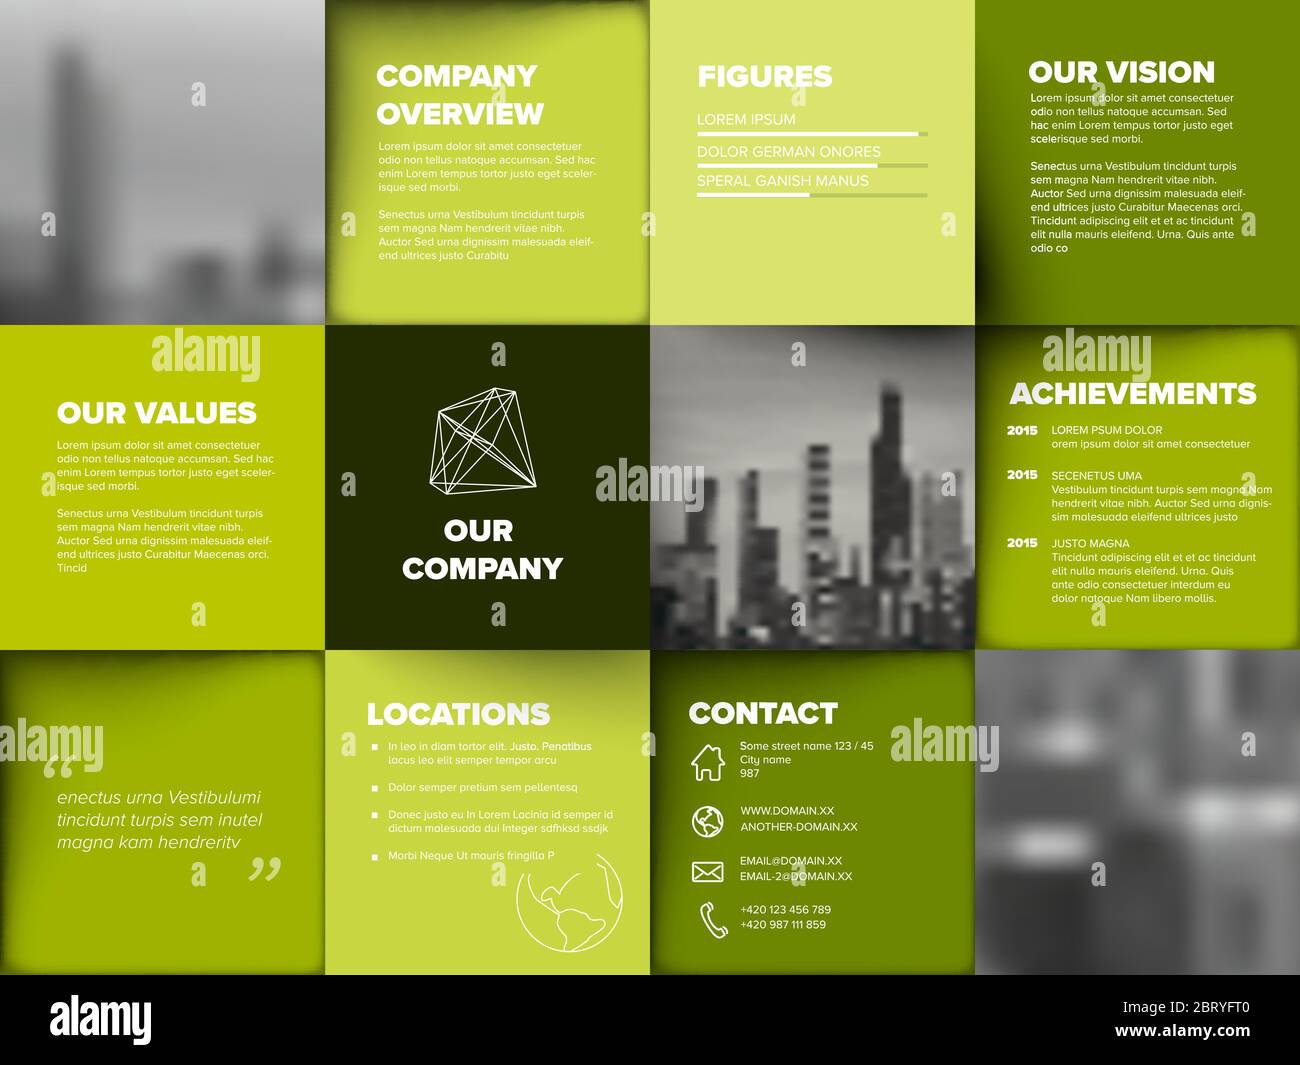 company-profile-template-corporation-main-information-presentation